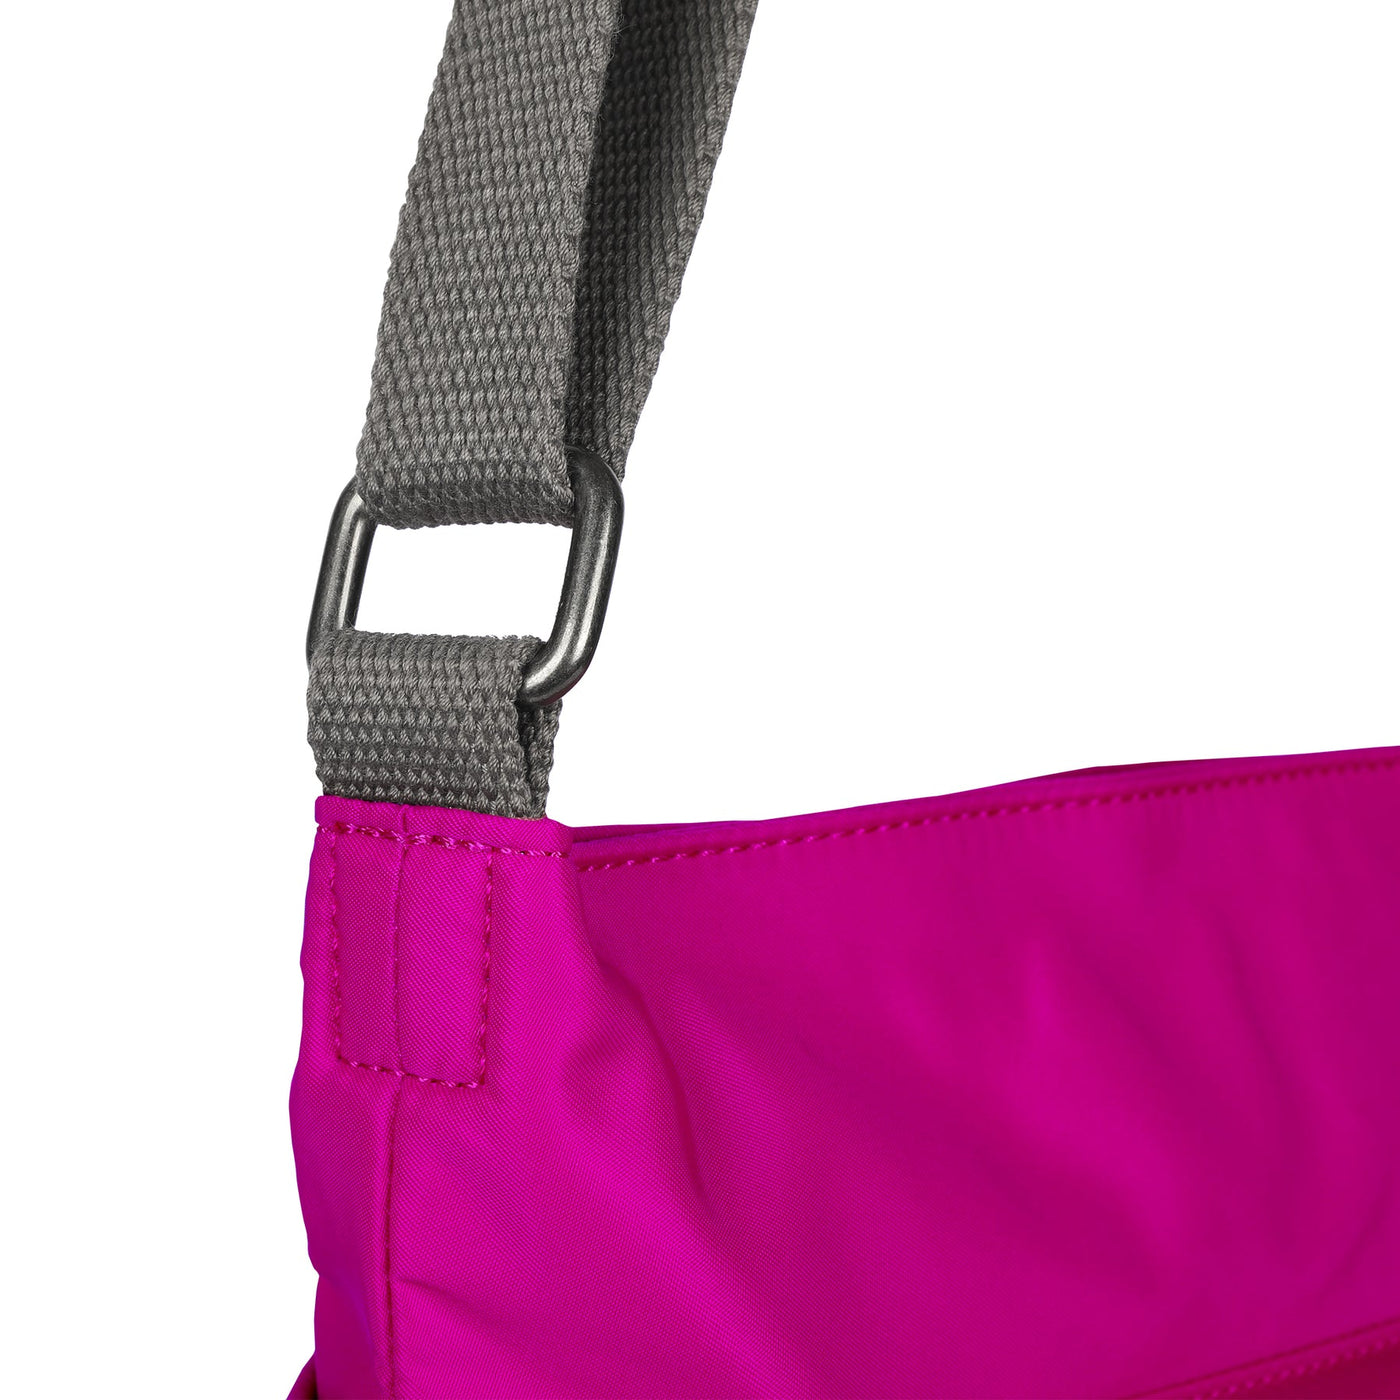 Roka Kennington B Medium Crossbody Bag -Sustainable Nylon - Candy Pink